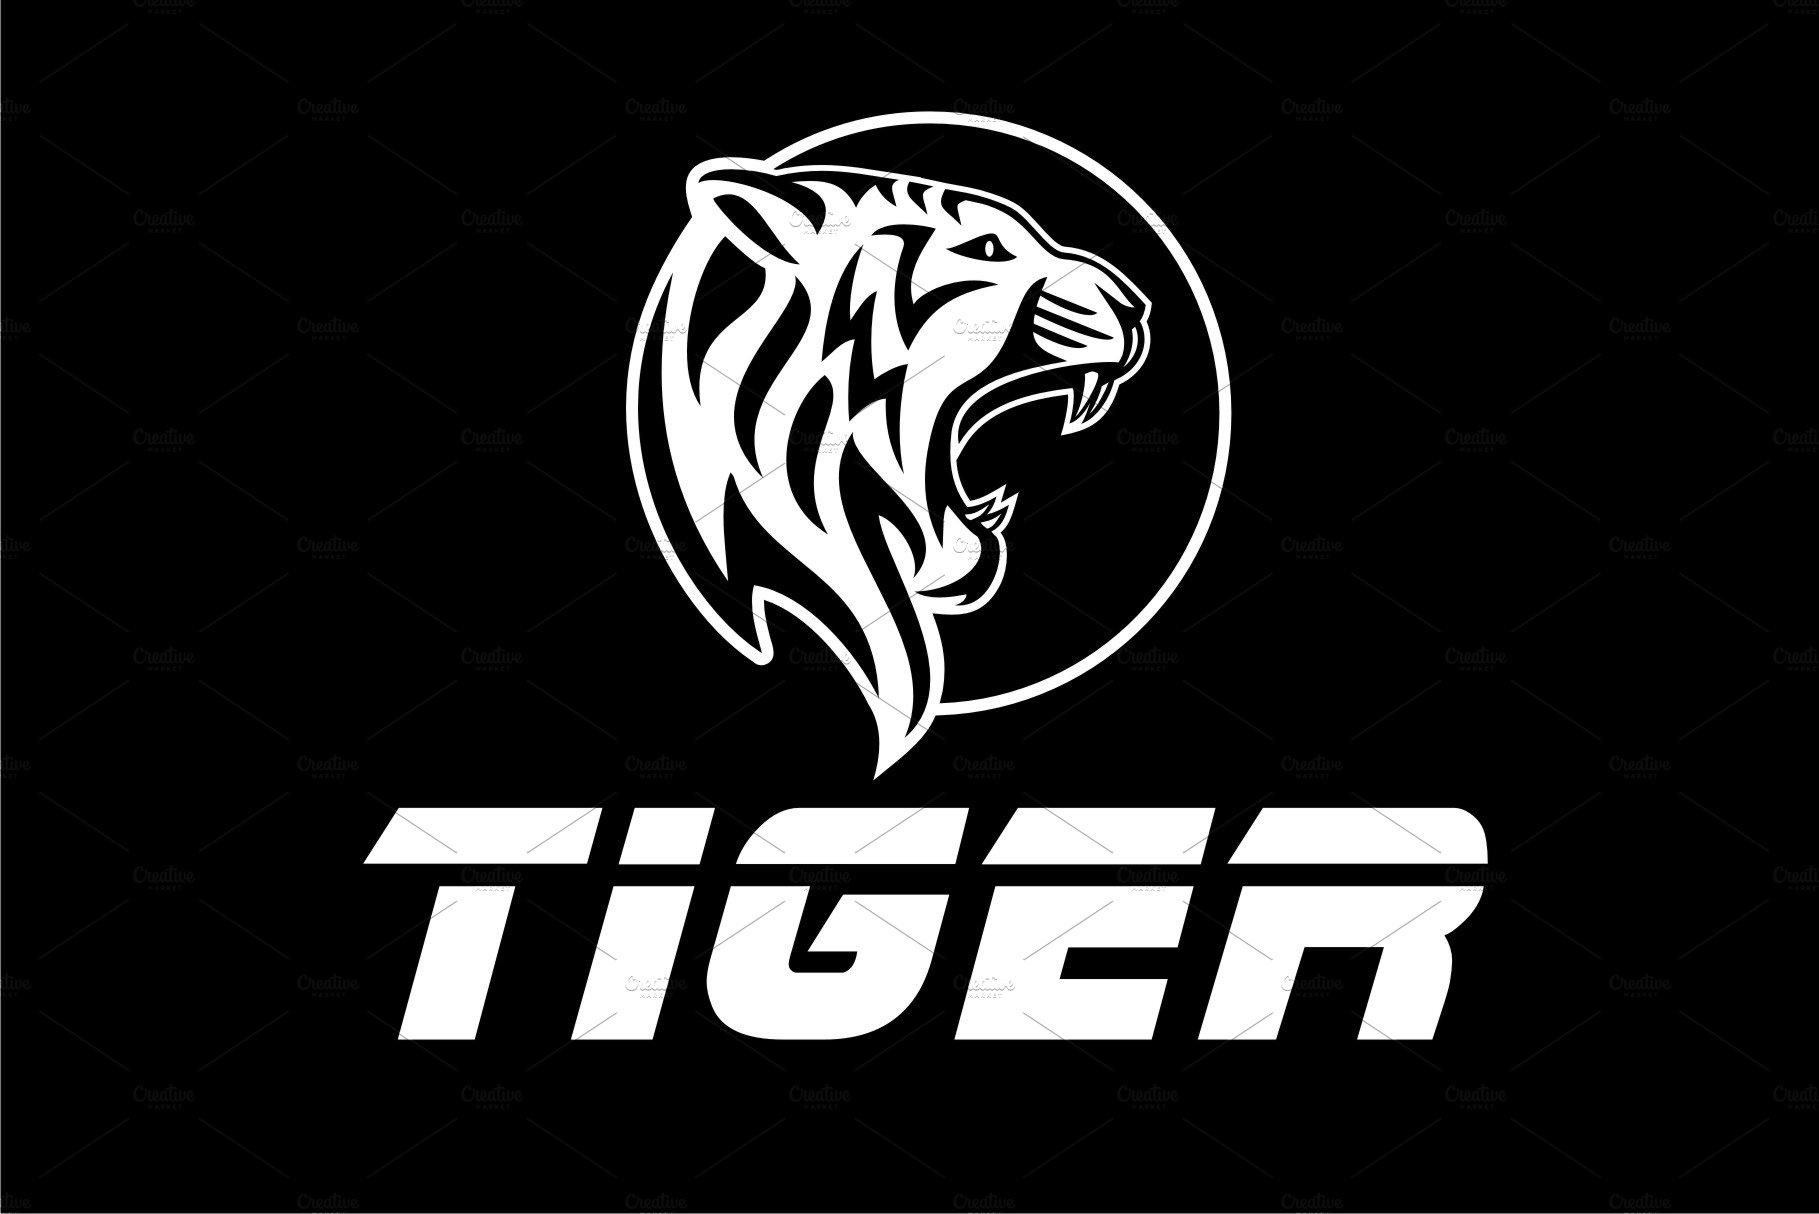 Black Tiger preview image.